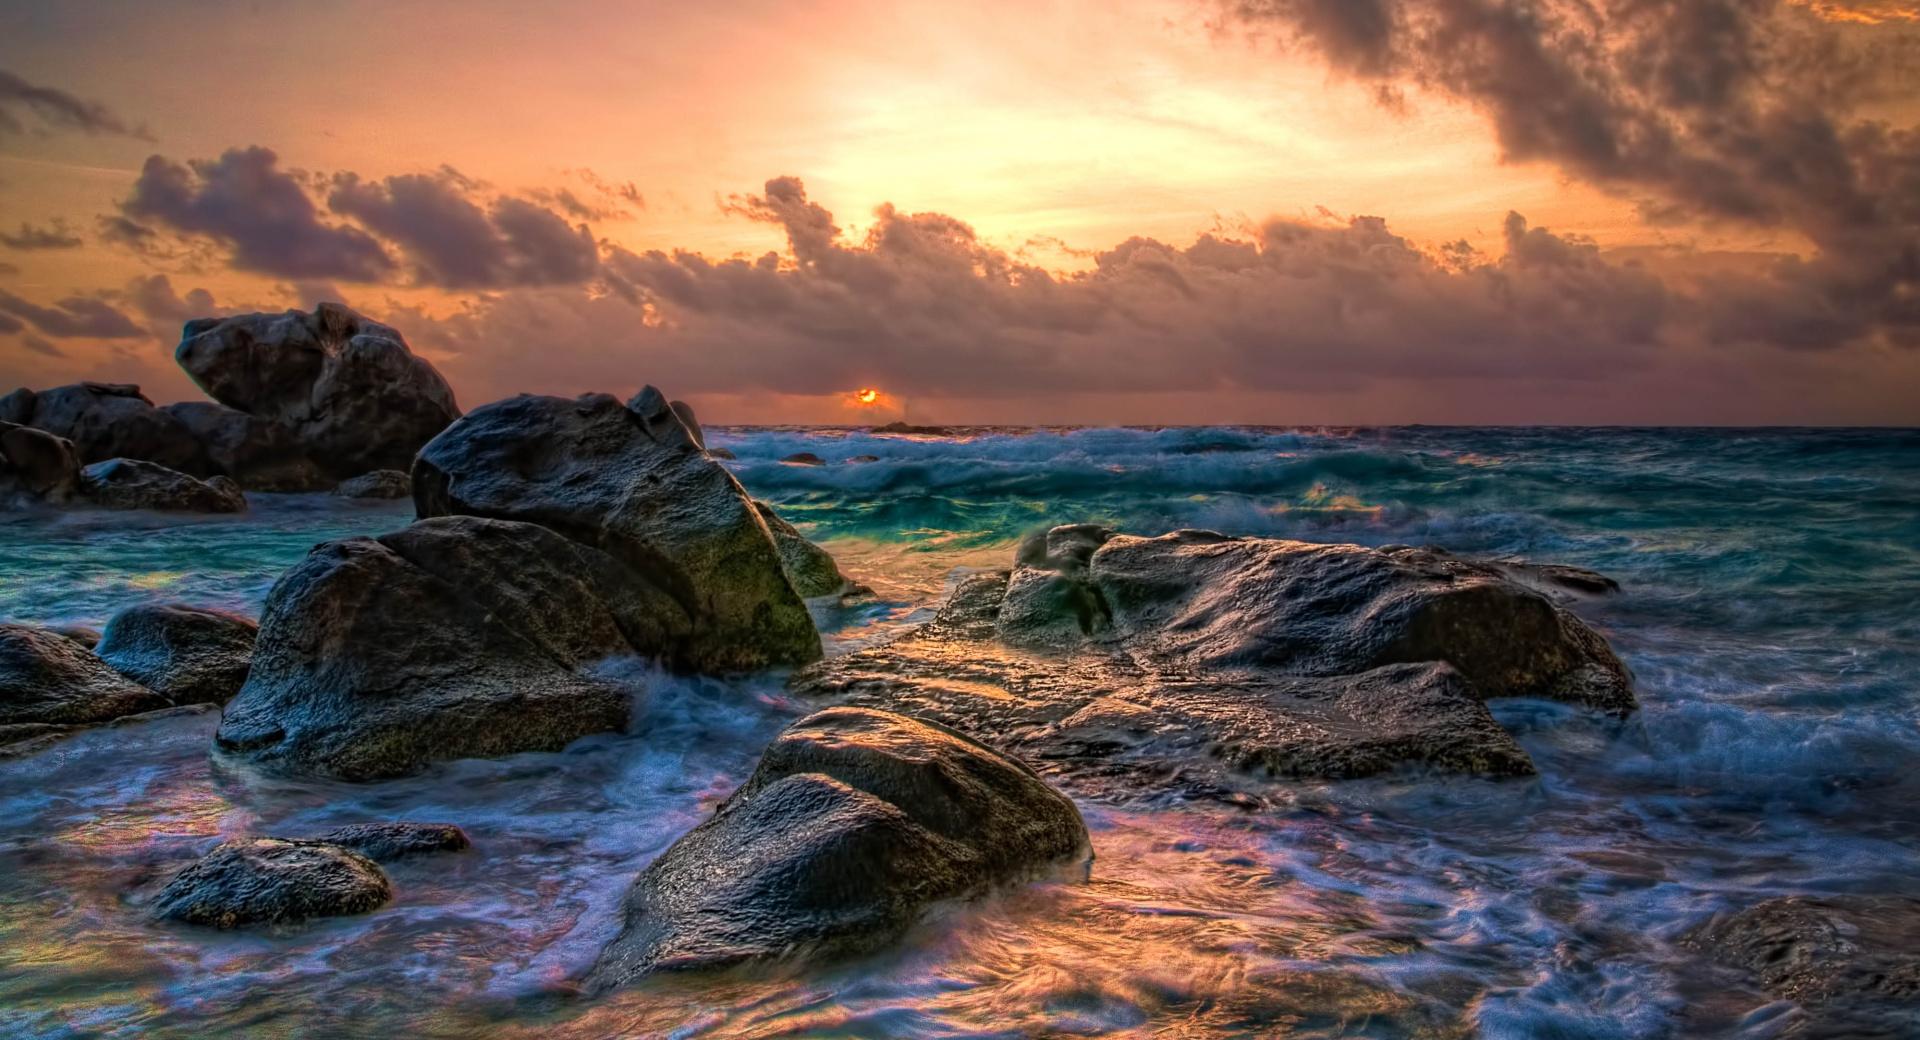 Aruba Sunrise at 1280 x 960 size wallpapers HD quality